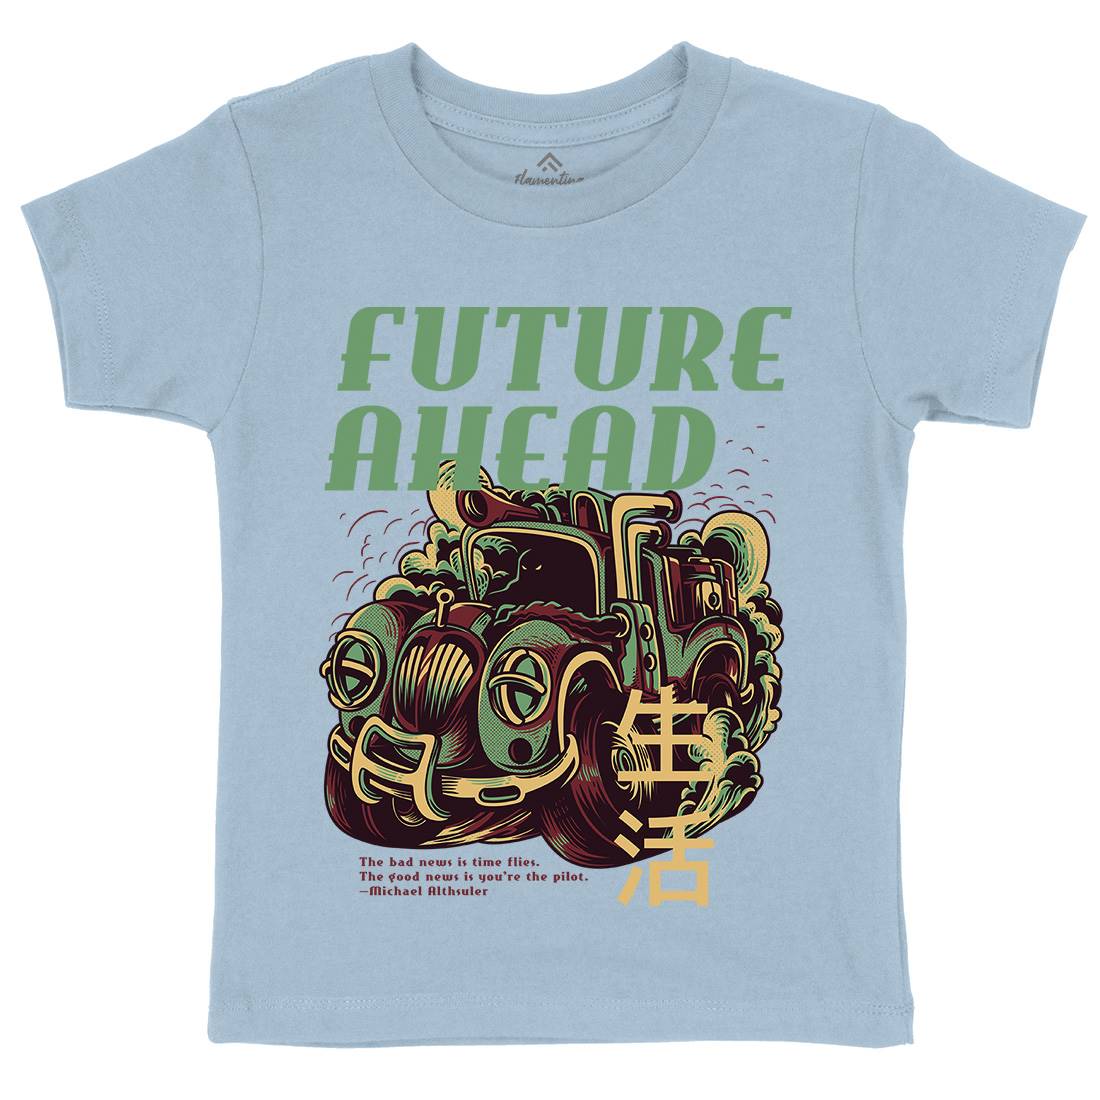 Future Ahead Kids Crew Neck T-Shirt Cars D787